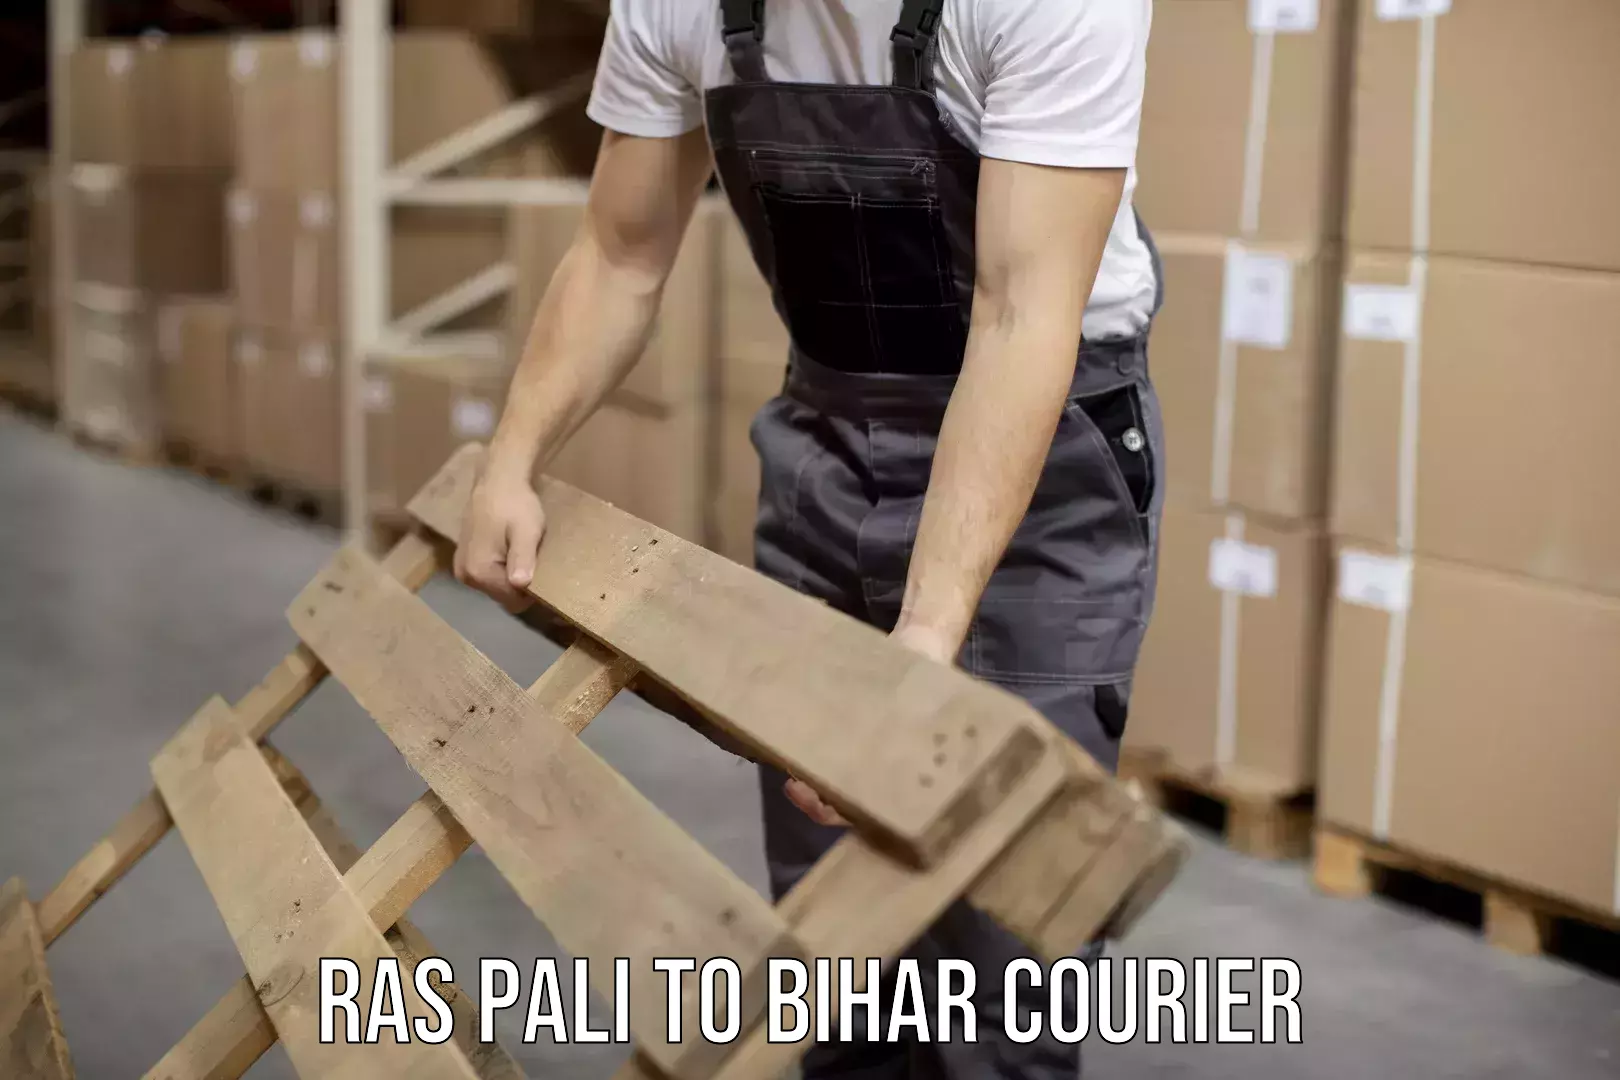 User-friendly delivery service Ras Pali to Bihar